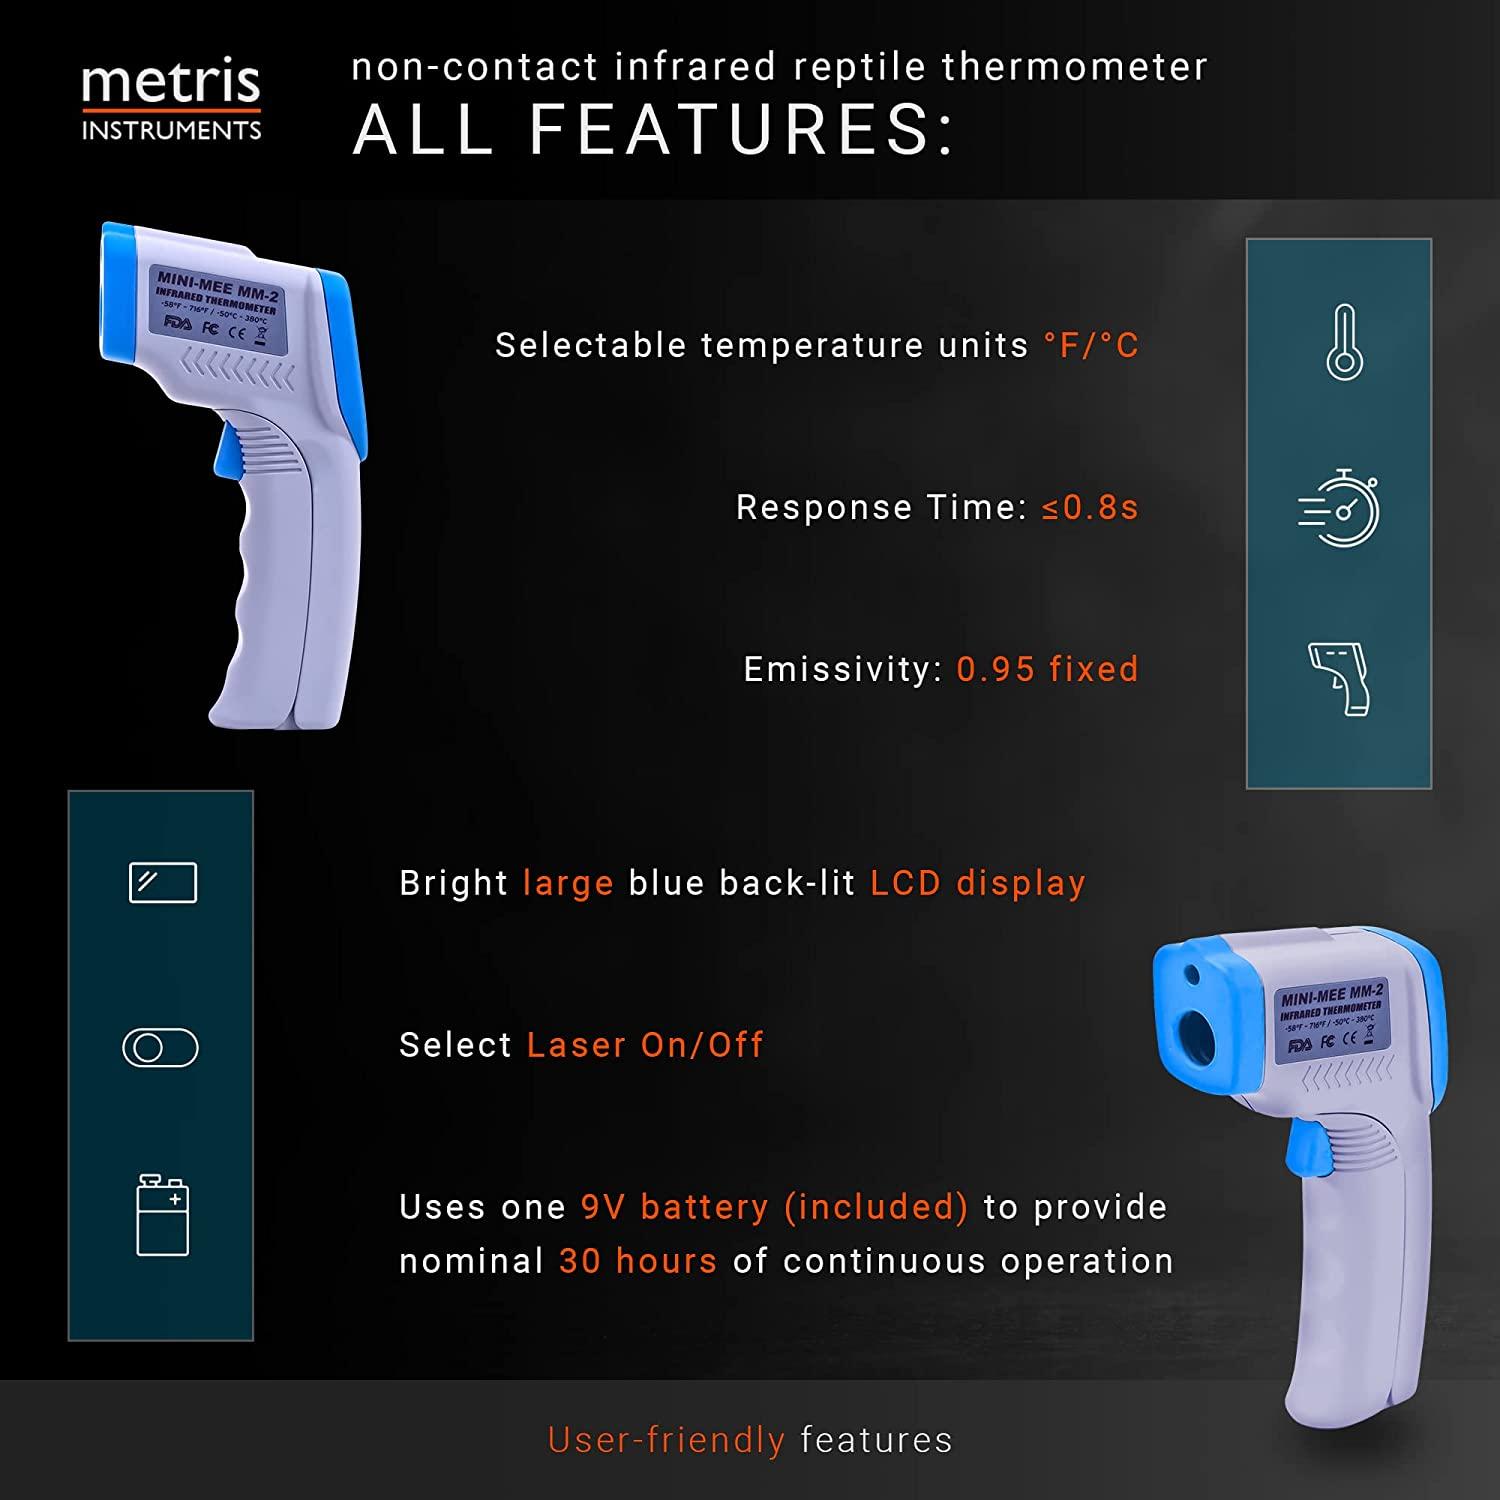 Metris Mini-Mee Digital Non-Contact Digital Infrared Reptile Thermometer,  Laser Temperature Gun with 1-Point Aiming use for Fish Tank, Snake Habitat,  Terrarium Kit Accessories